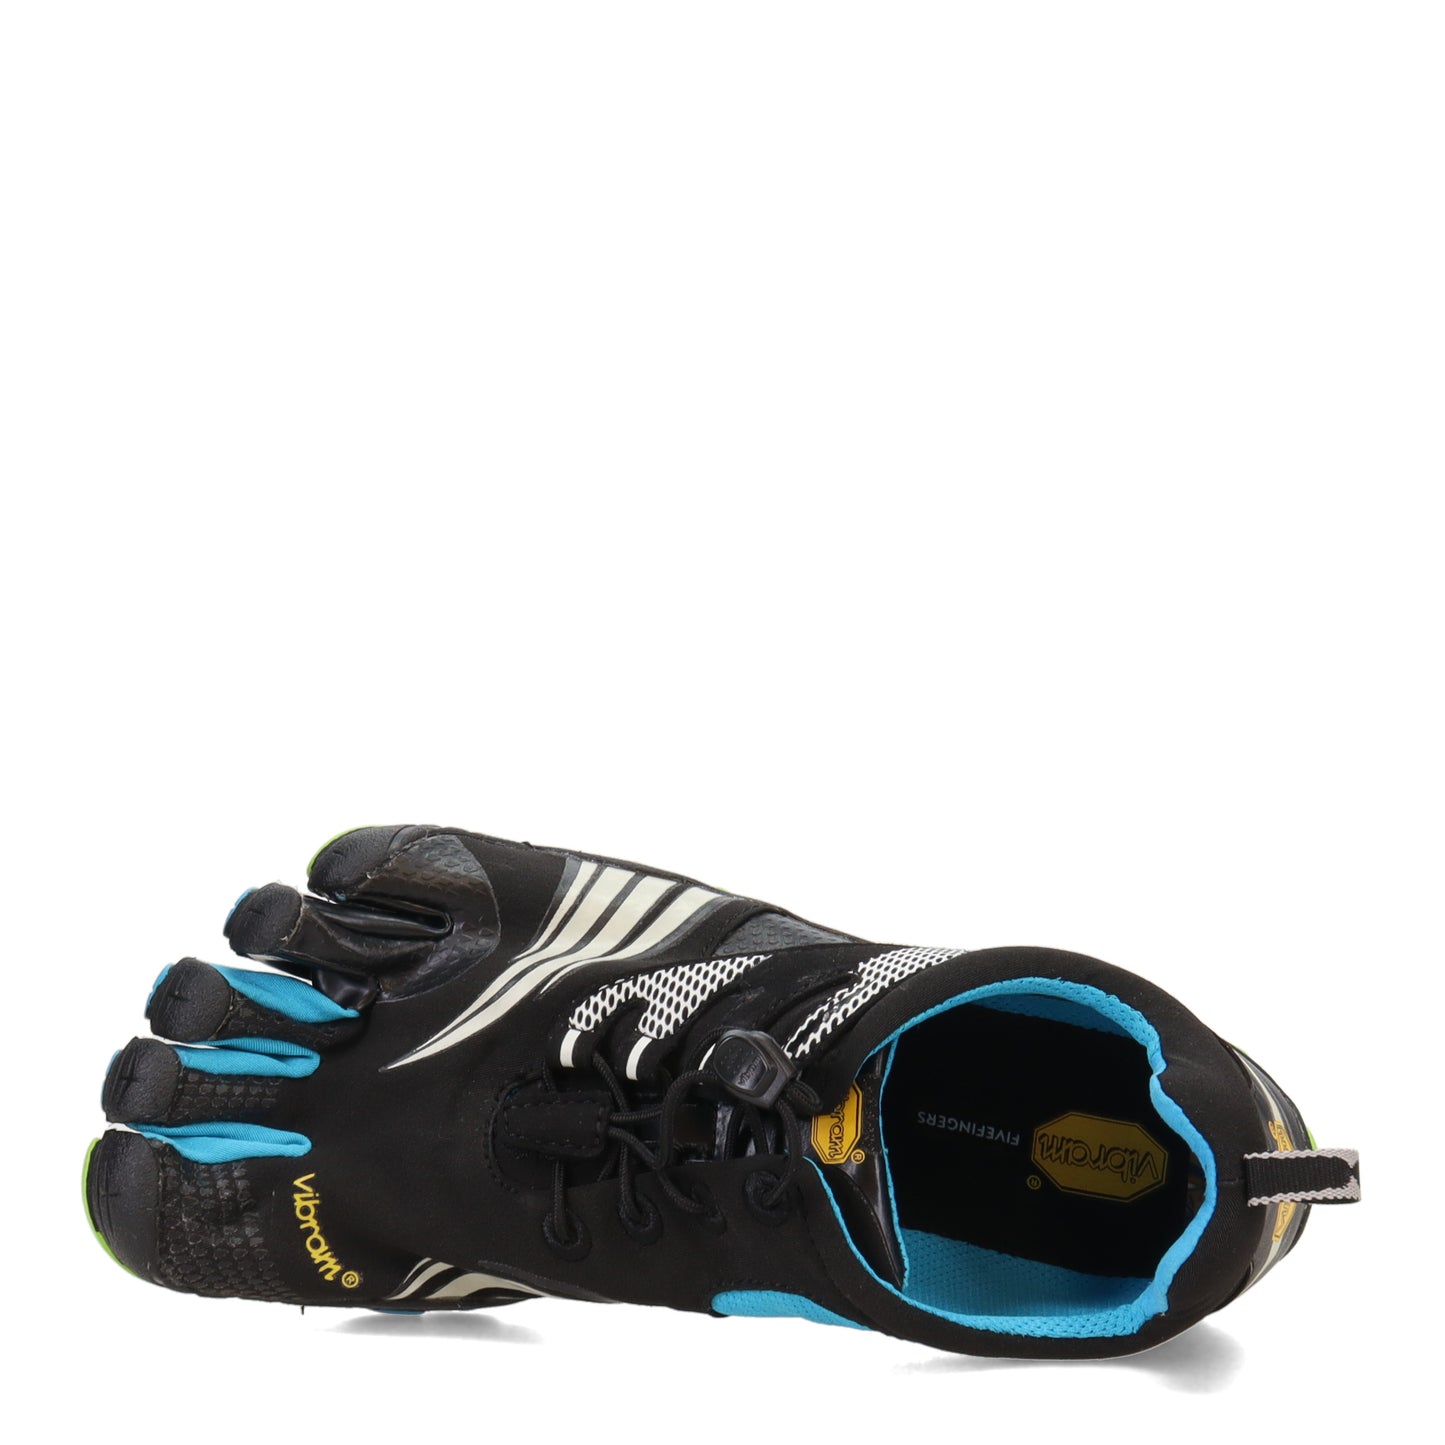 Peltz Shoes  Men's Vibram Five Fingers KMD Sport LS Running Shoe Black/Blue/Green 16M3701